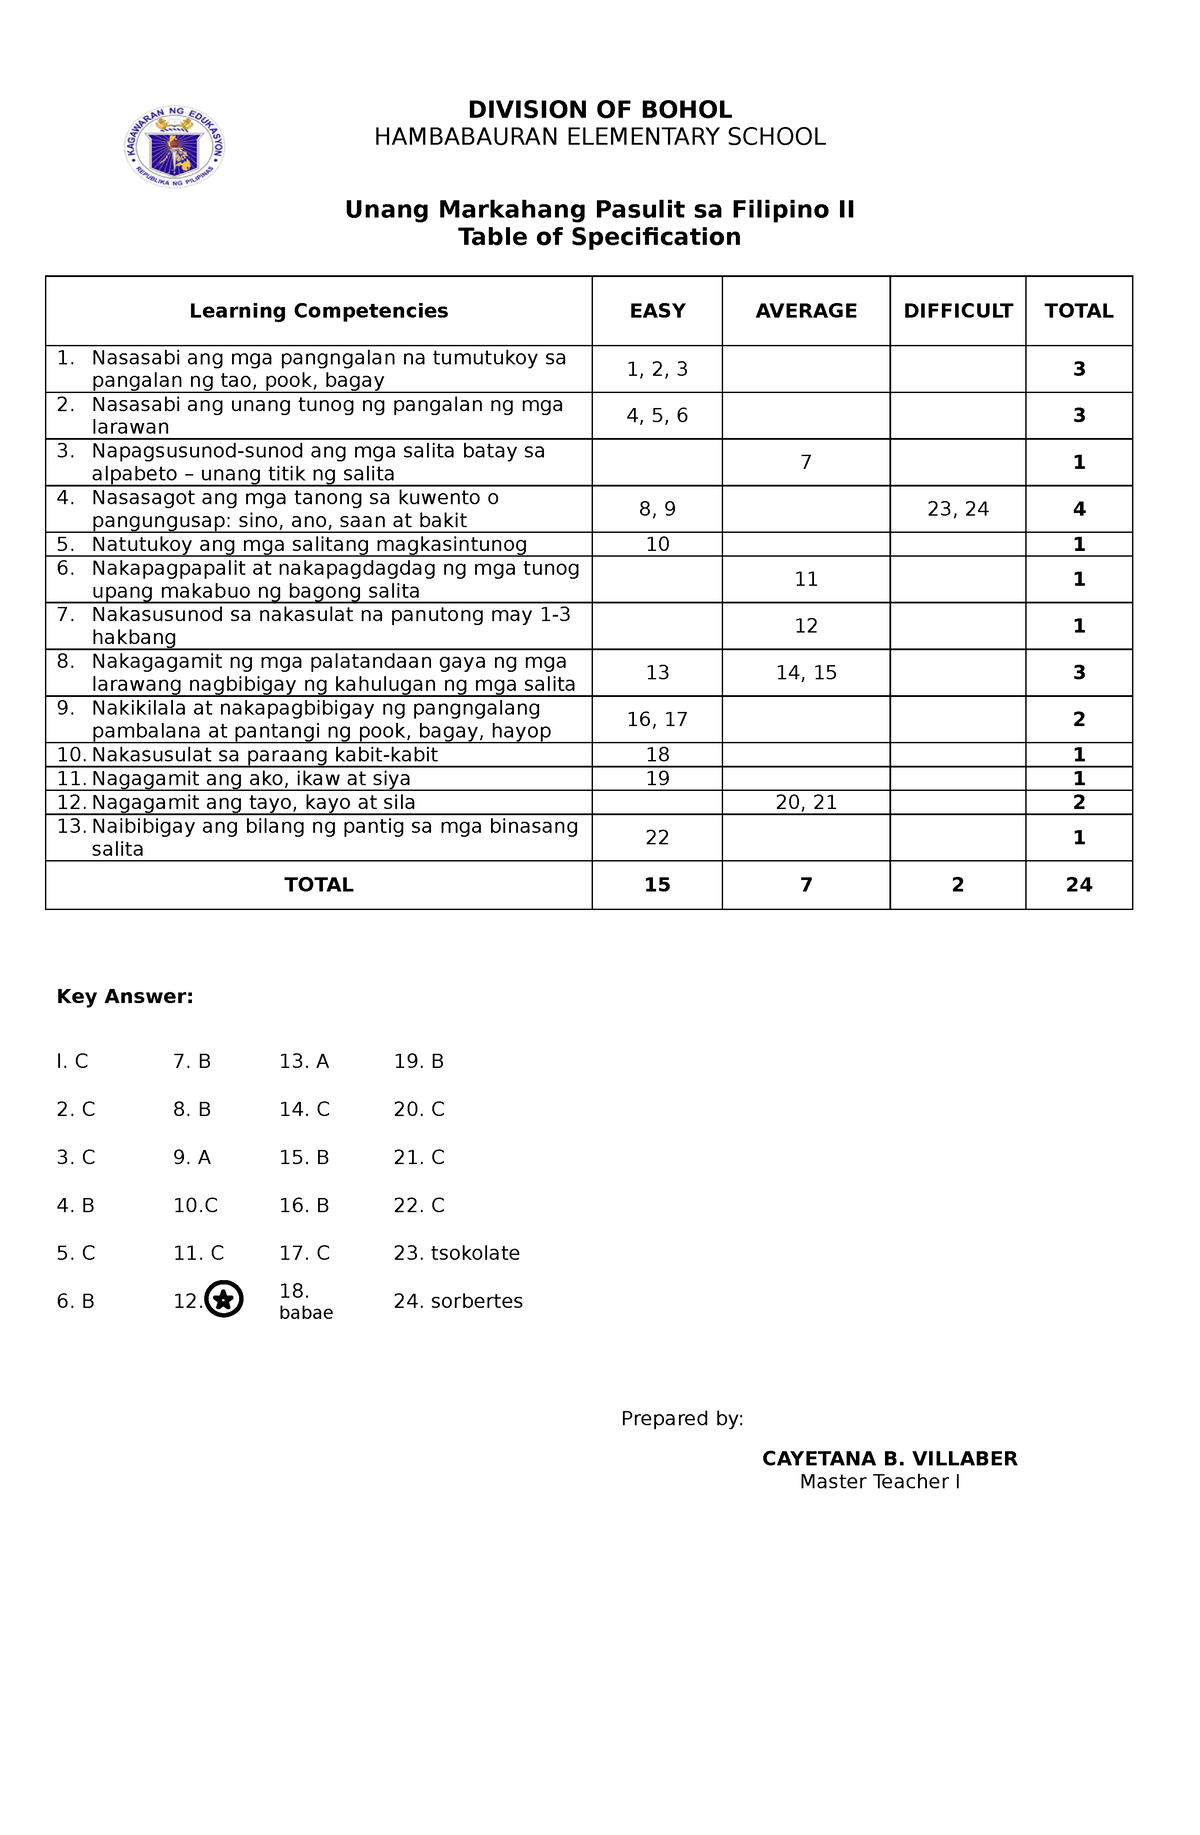 Filipino tos - Table of Specification - DIVISION OF BOHOL HAMBABAURAN ...